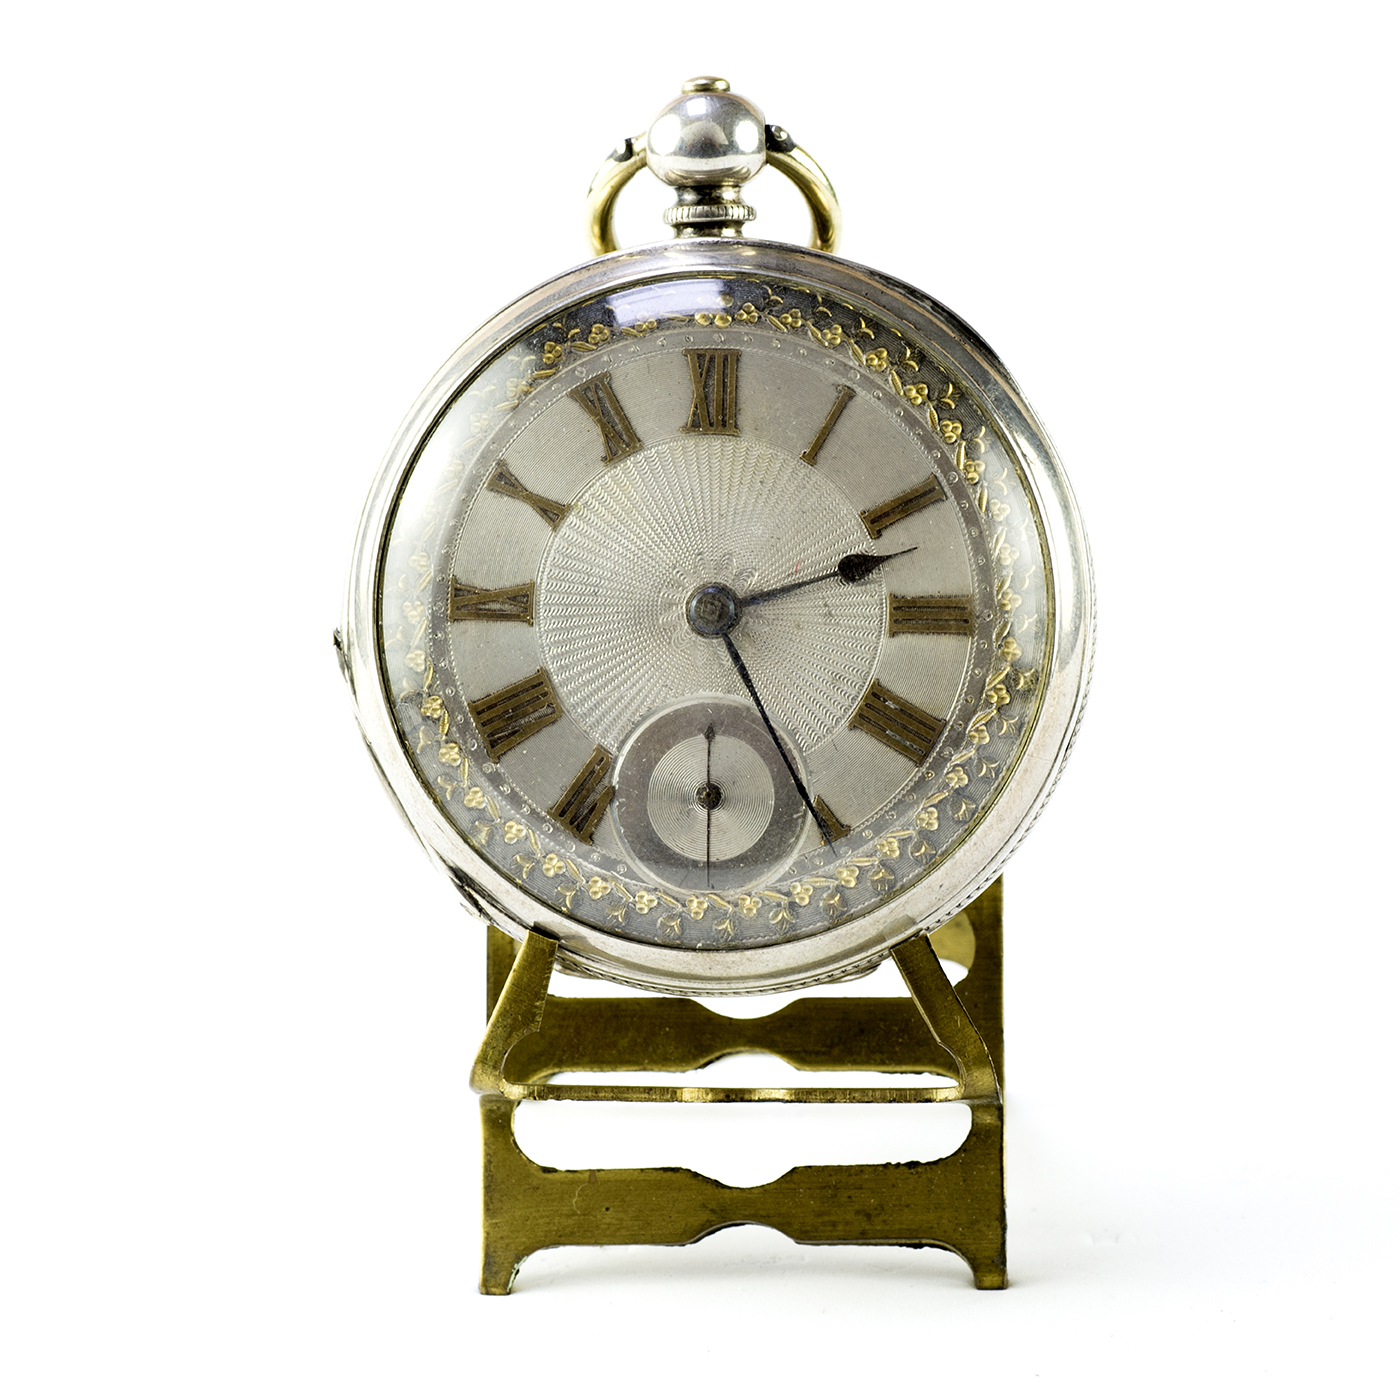 English pocket watch, lepine. Switzerland, ca. 1880.